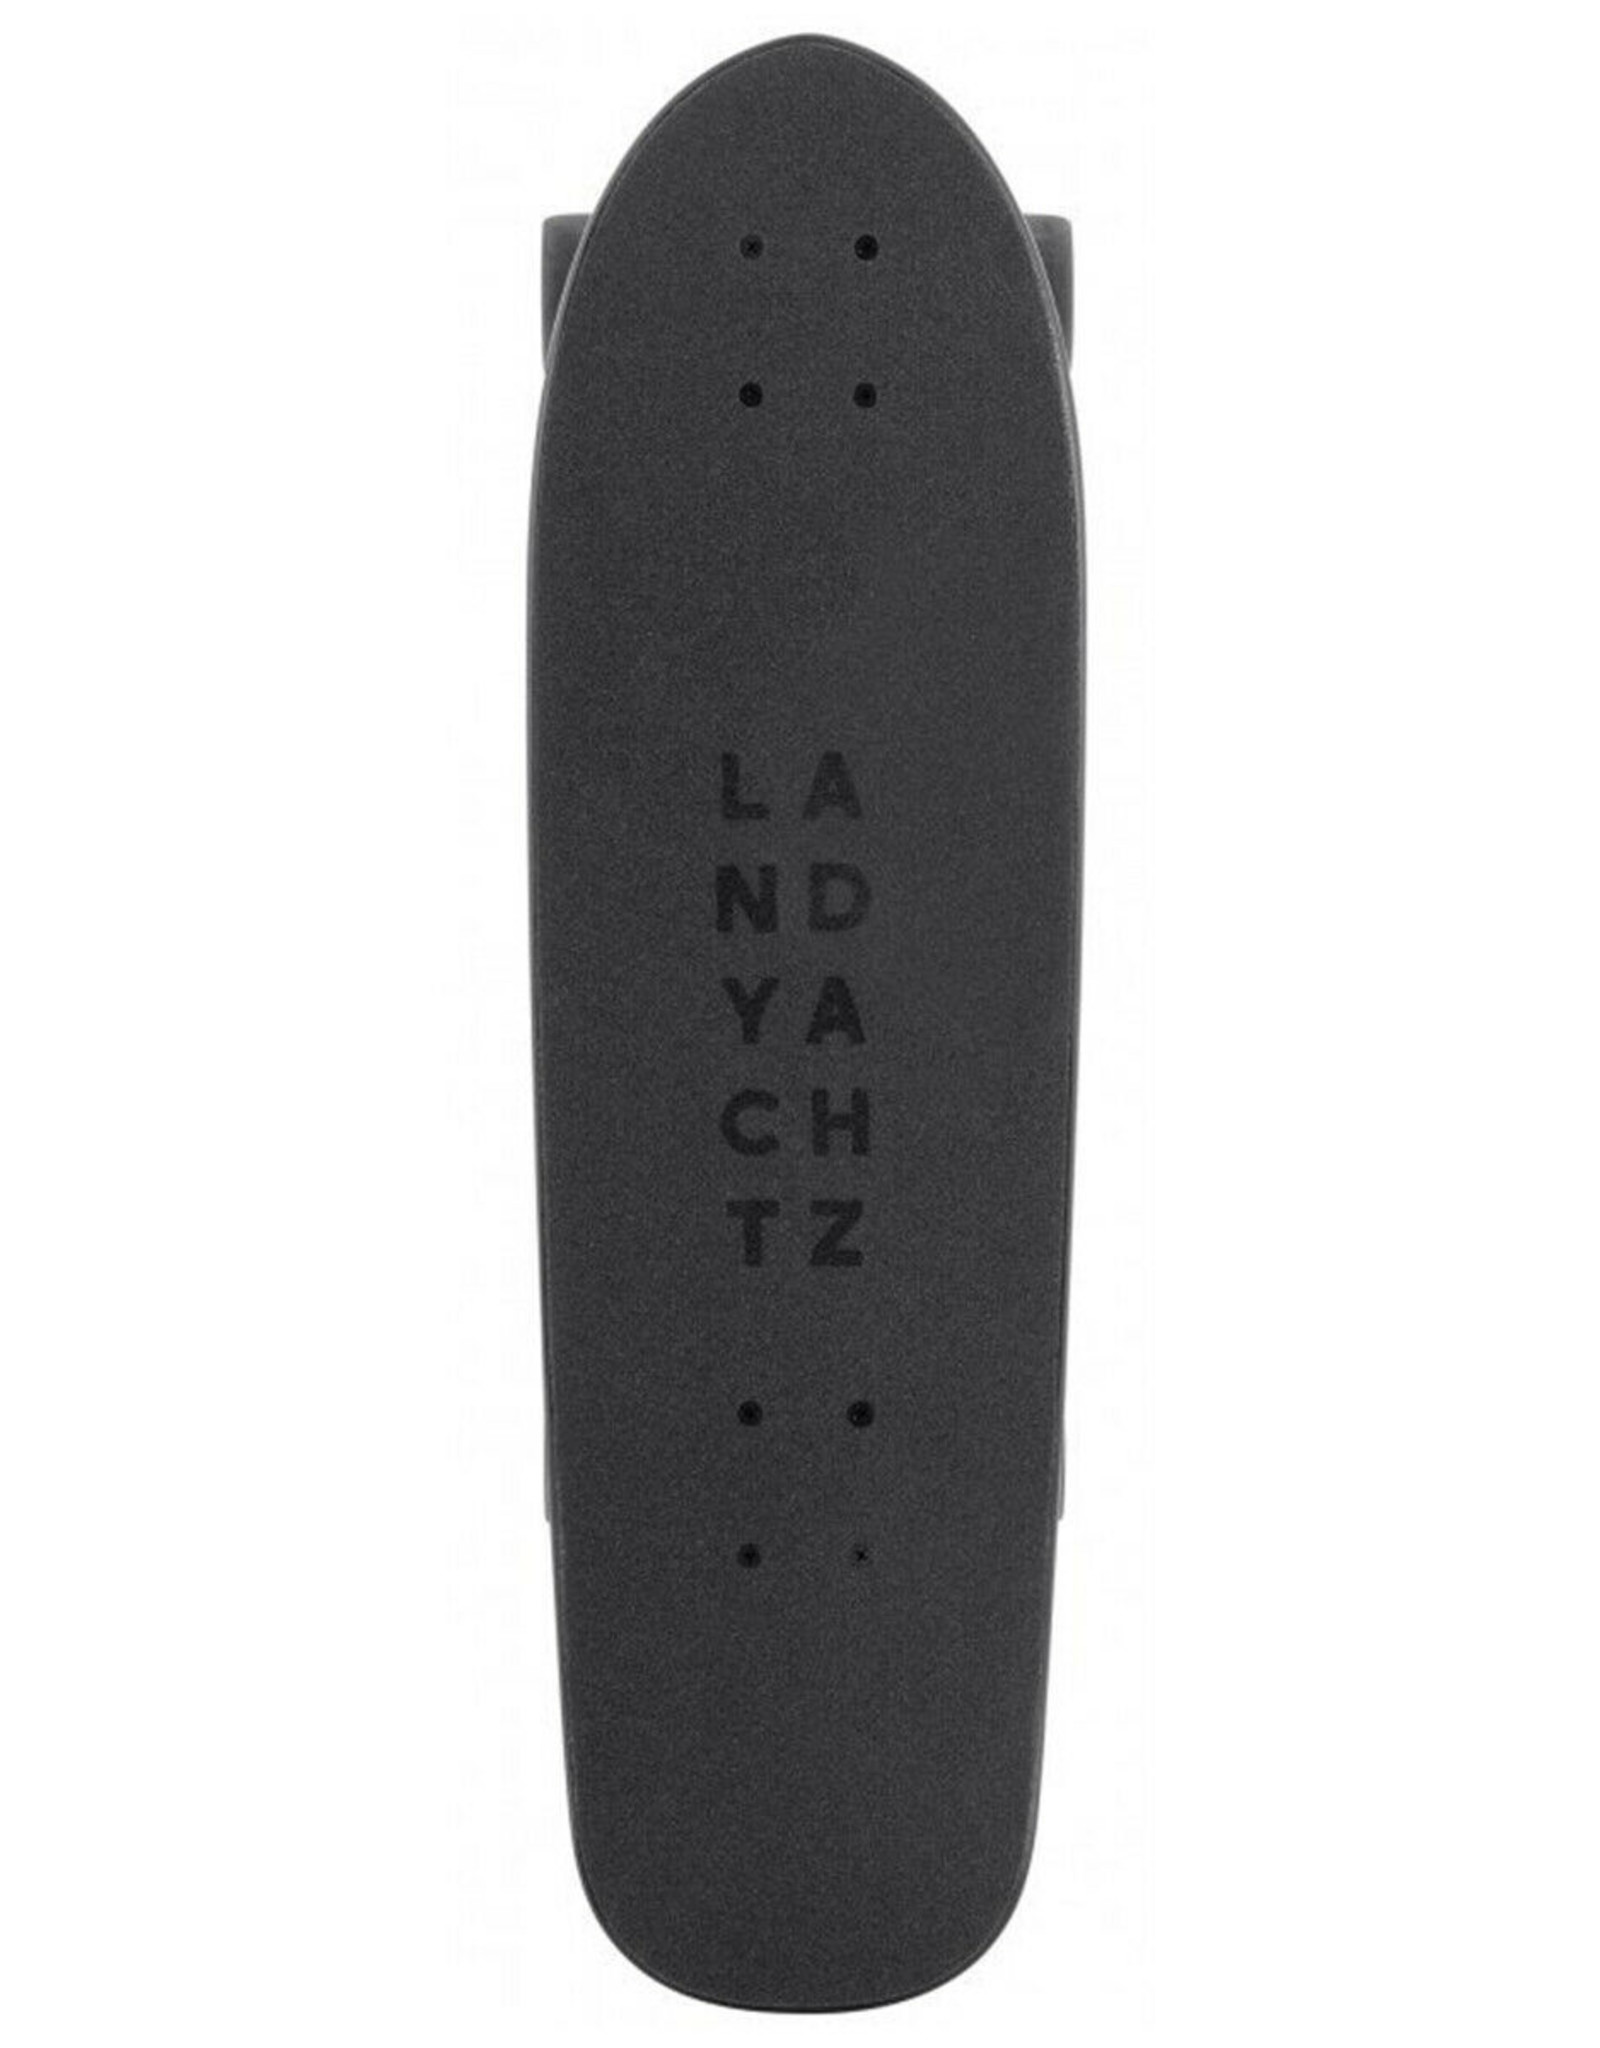 Landyachtz Landyachtz Dinghy Skeleton Black 29” Cruiser Skateboard